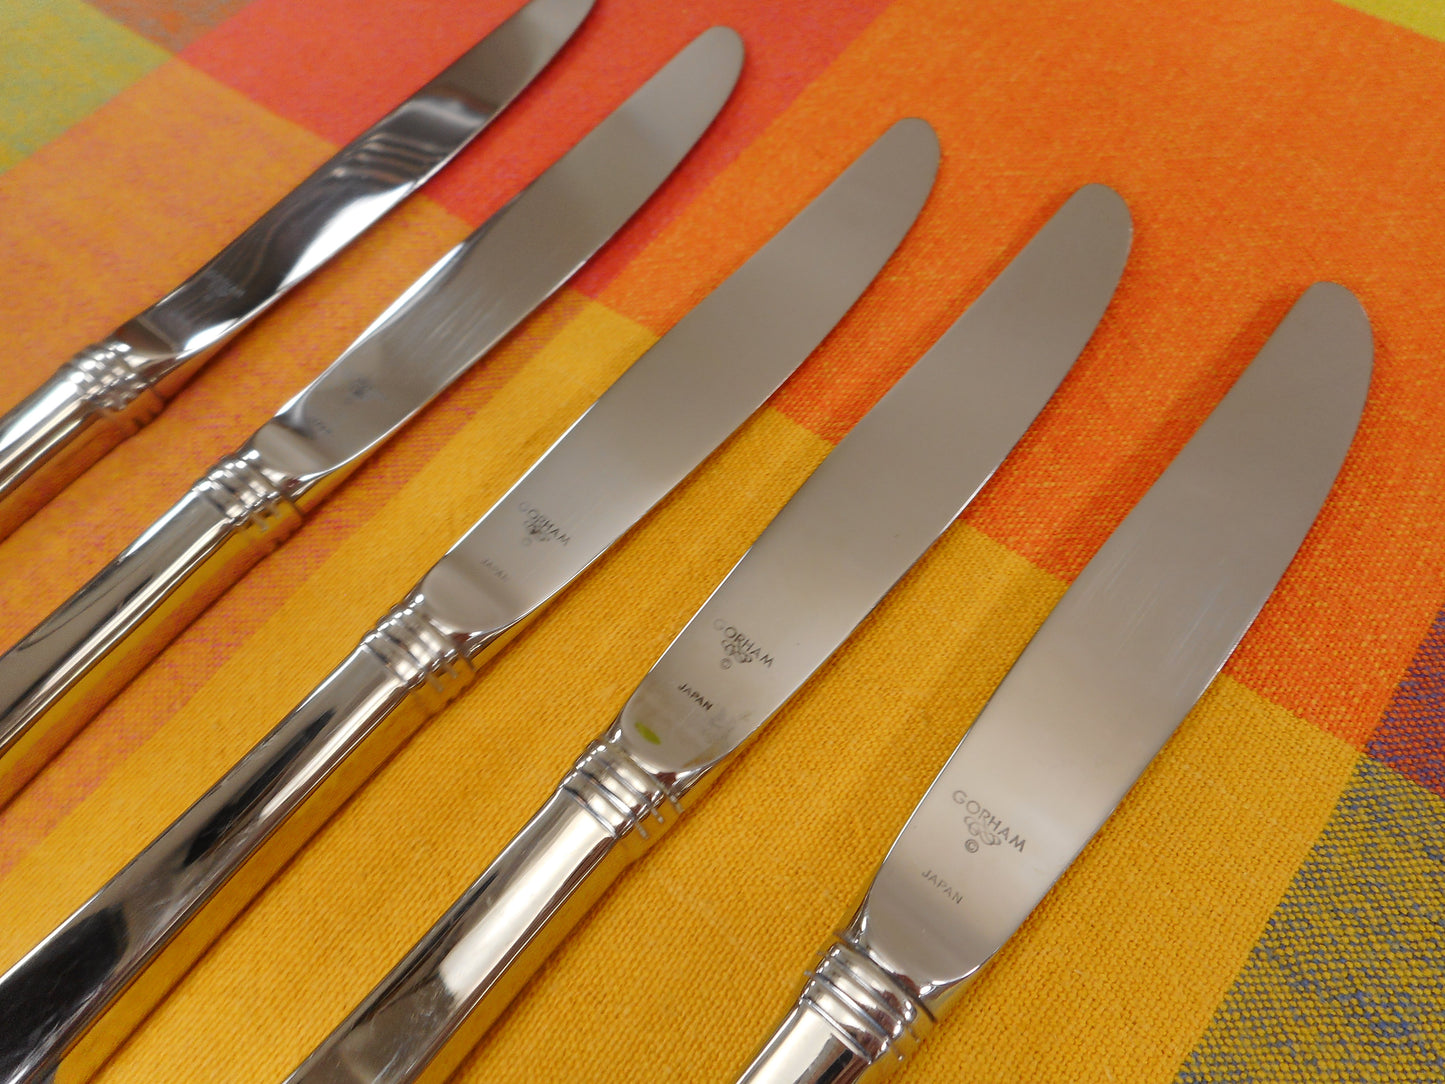 Gorham Japan Chancellor 18/8 Stainless Flatware - 5 Dinner Knives used